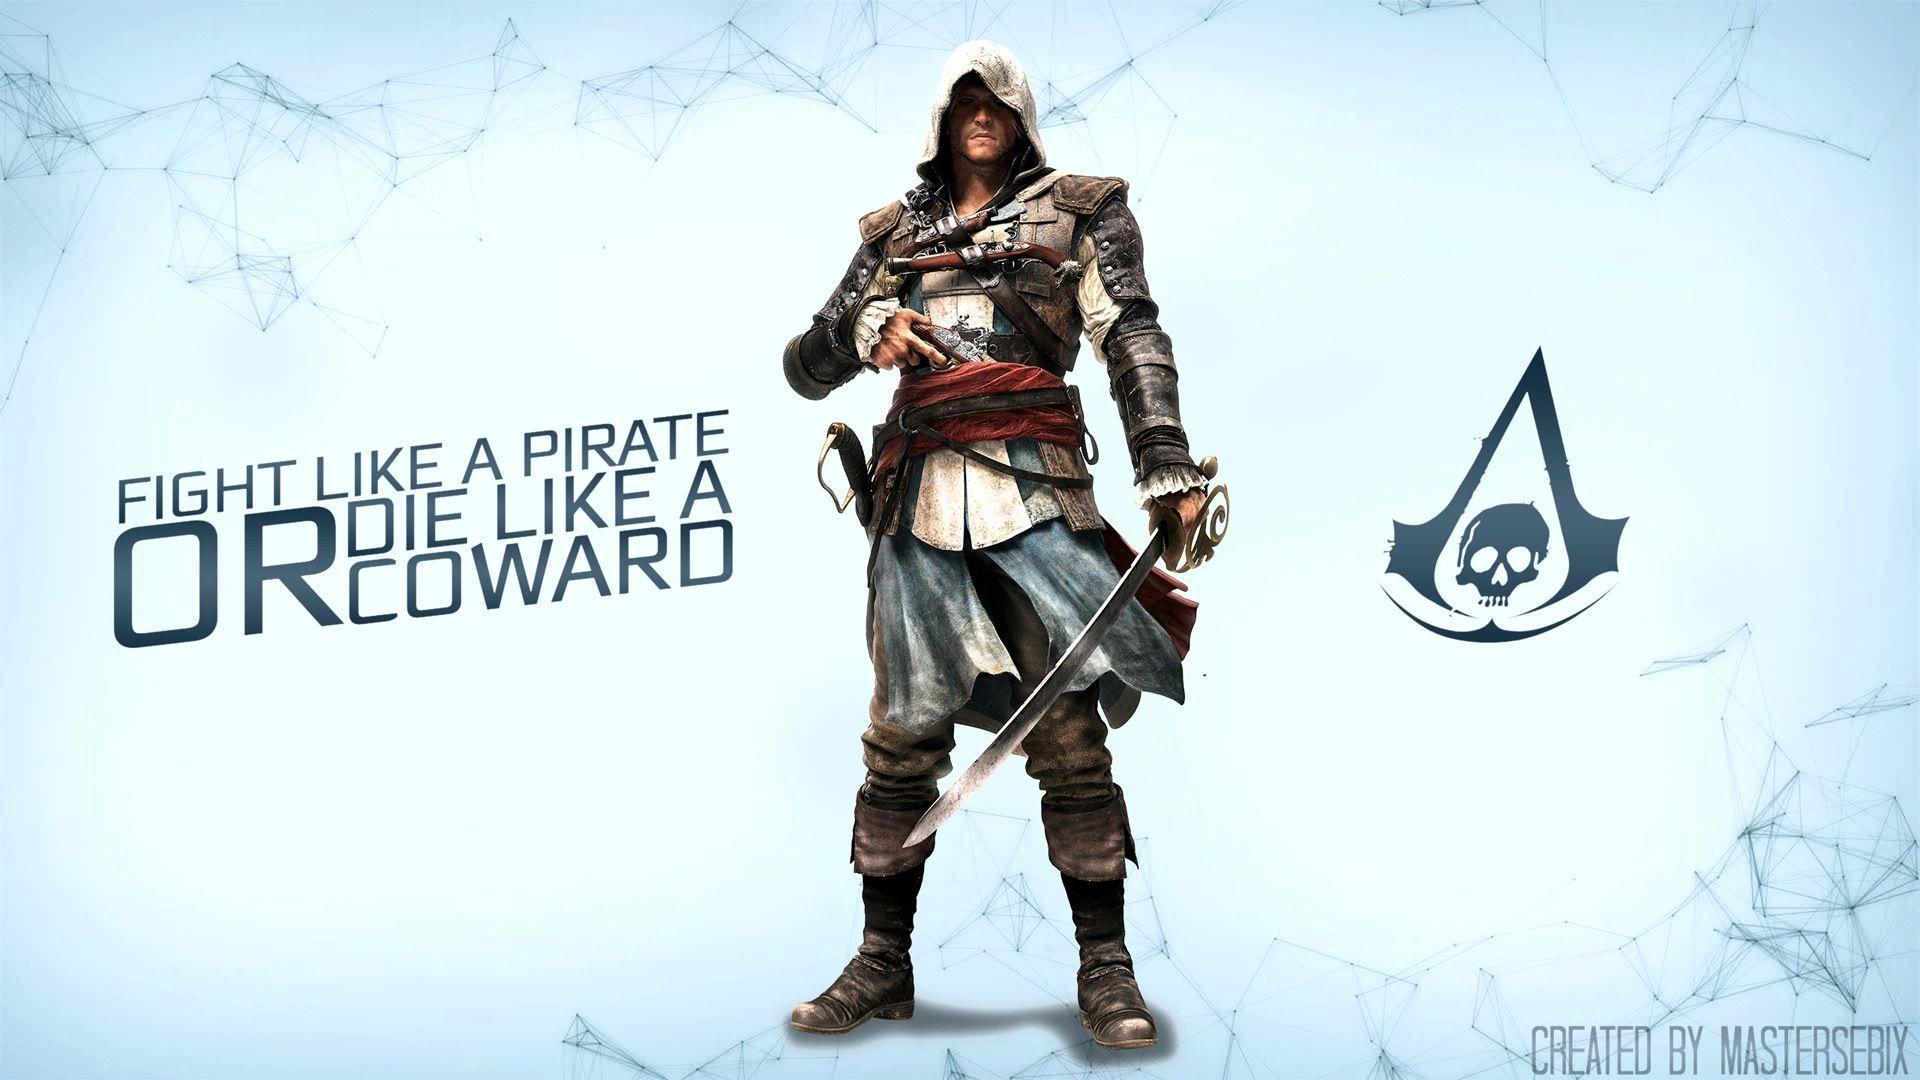 Assassin's Creed IV: Black Flag HD wallpaper